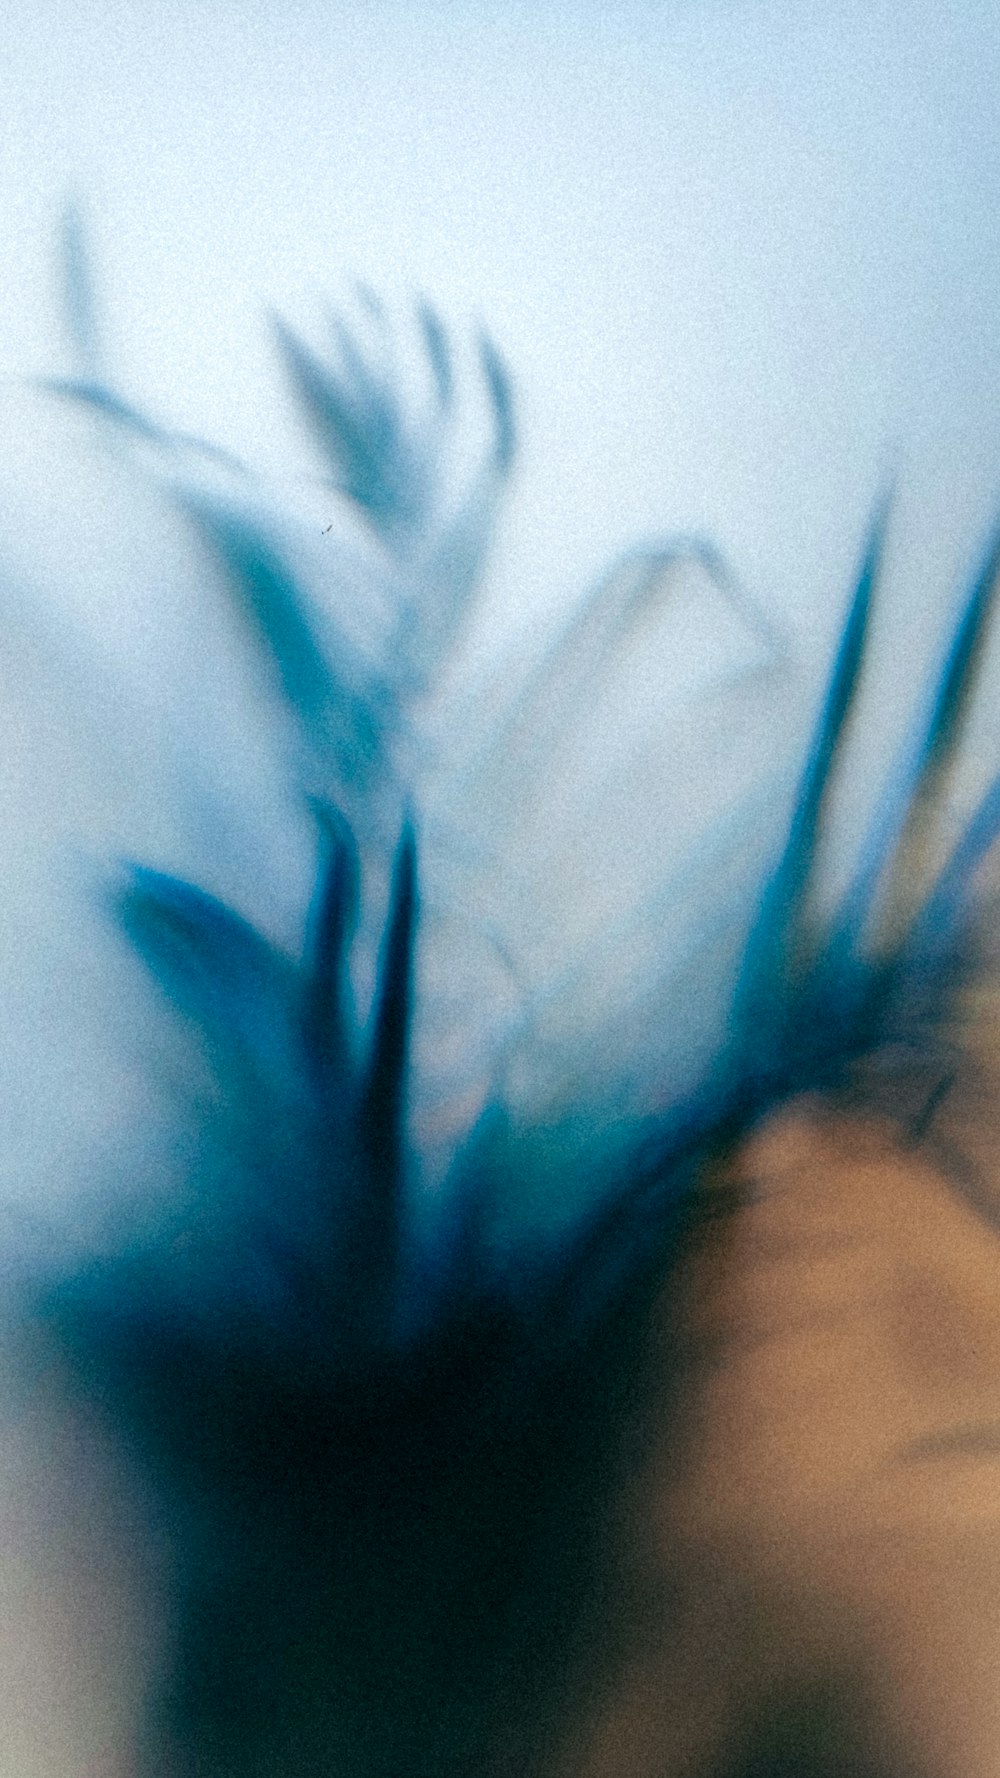 a close up of a blur